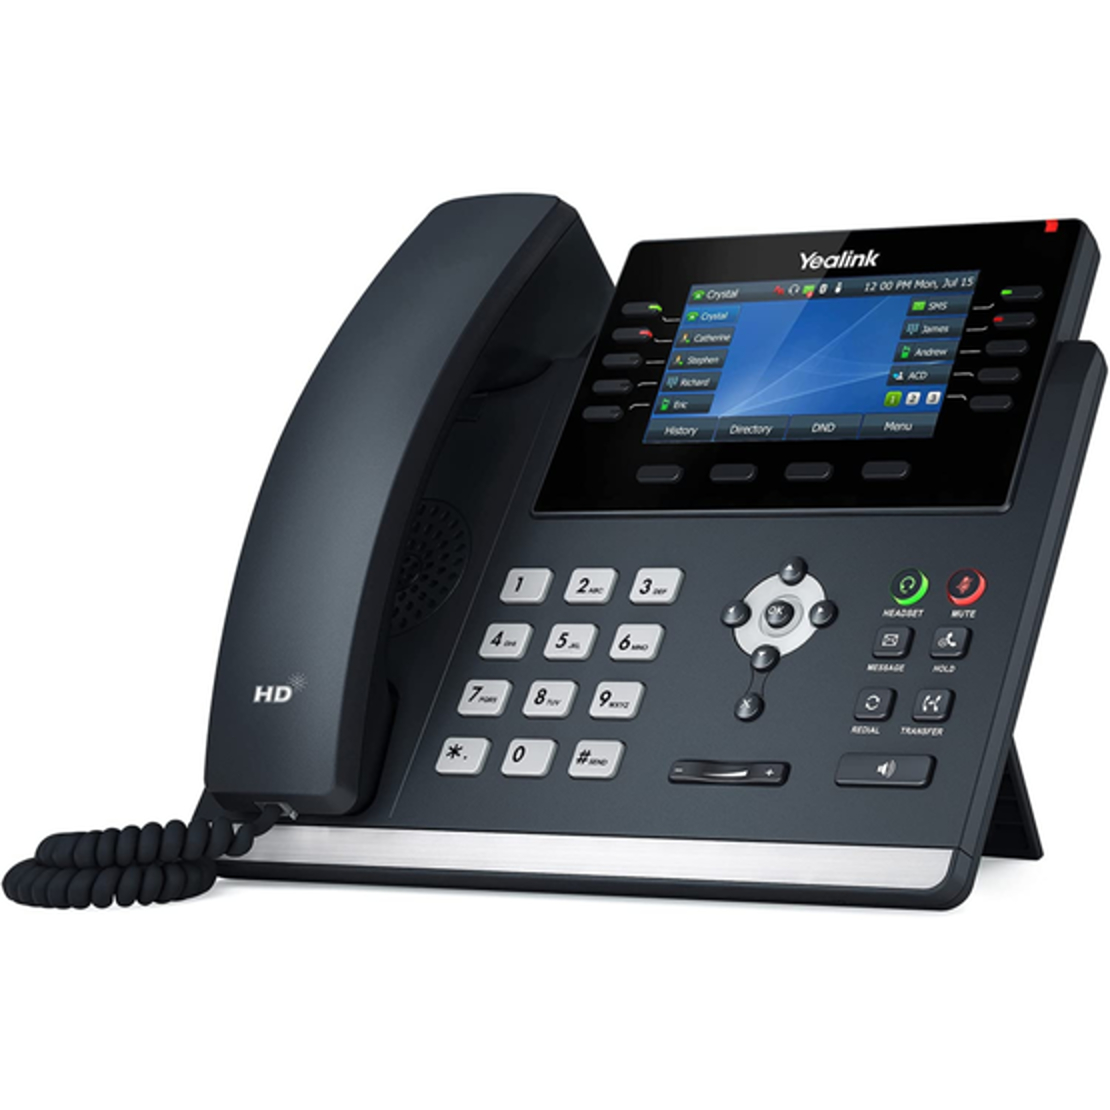 SIP טלפון שולחני עסקי Yealink T46U Business